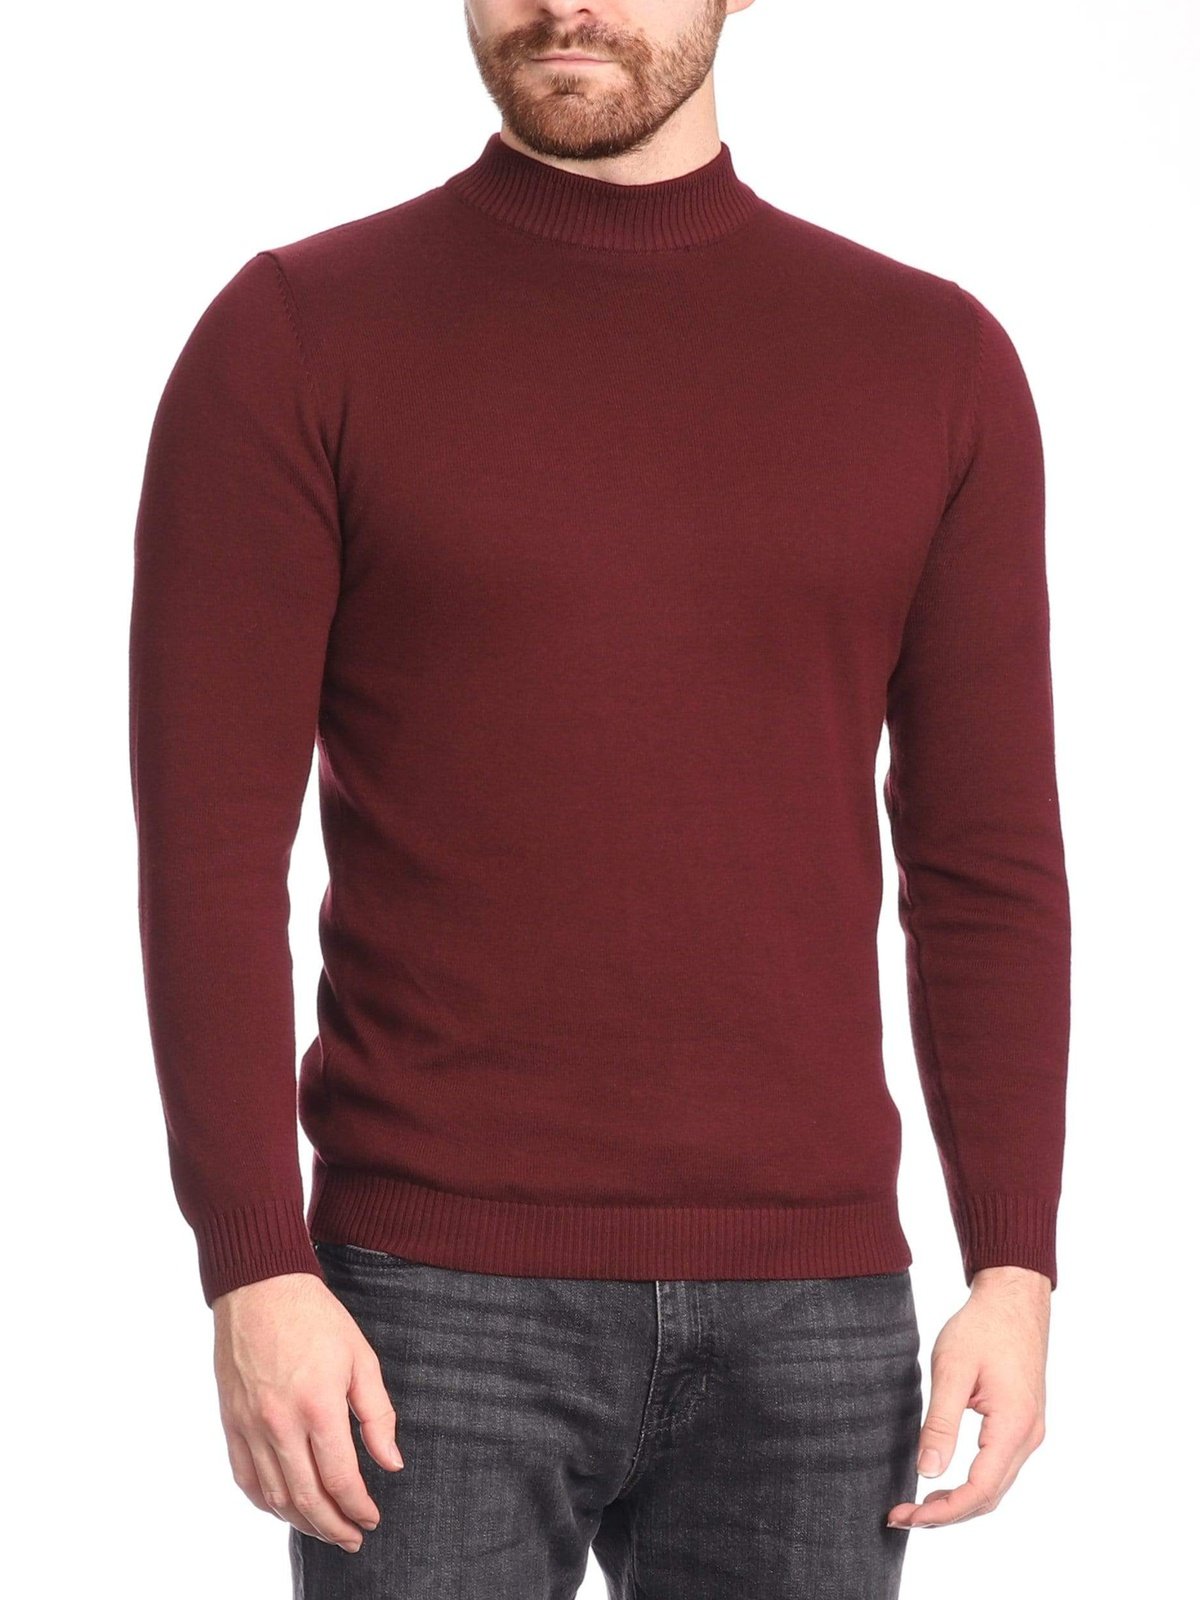 Arthur Black SWEATERS Arthur Black Men's Solid Burgundy Pullover Cotton Blend Mock Neck Sweater Shirt